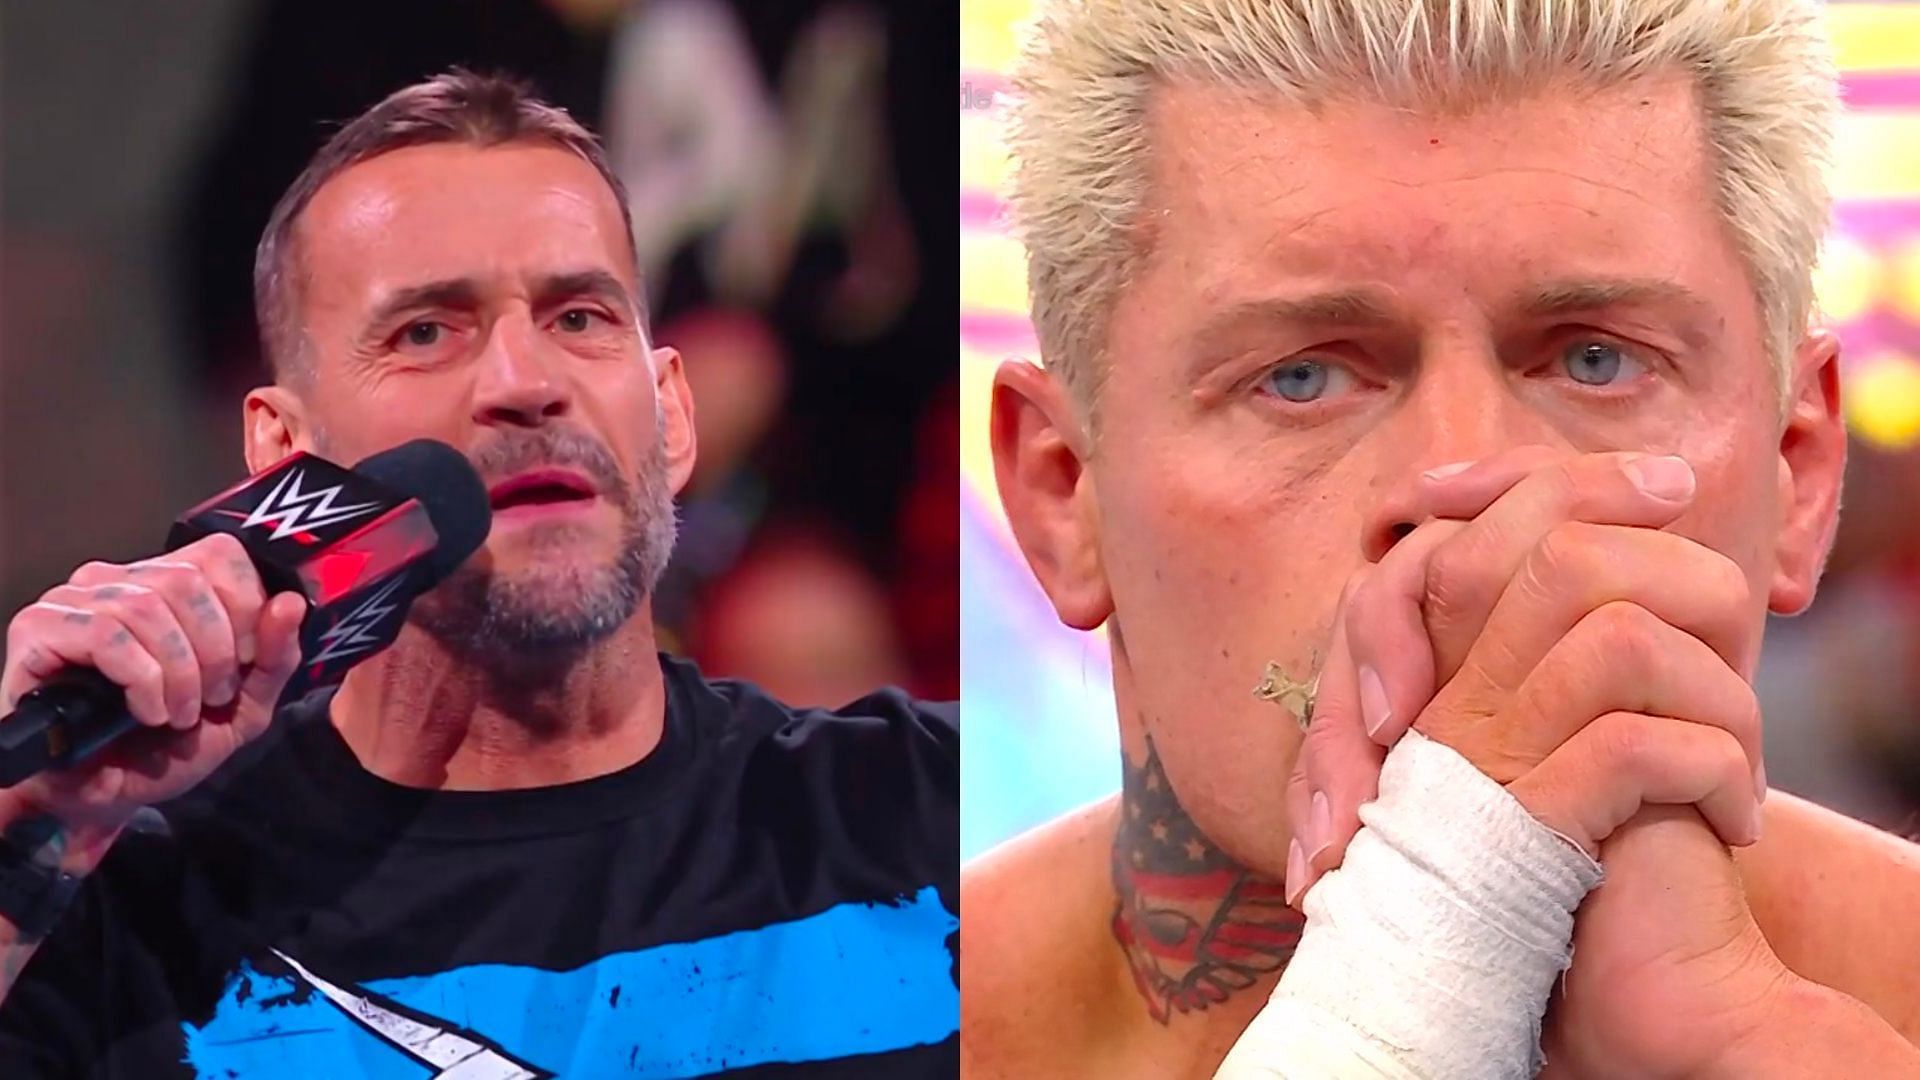 CM Punk returned this week at Survivor Series